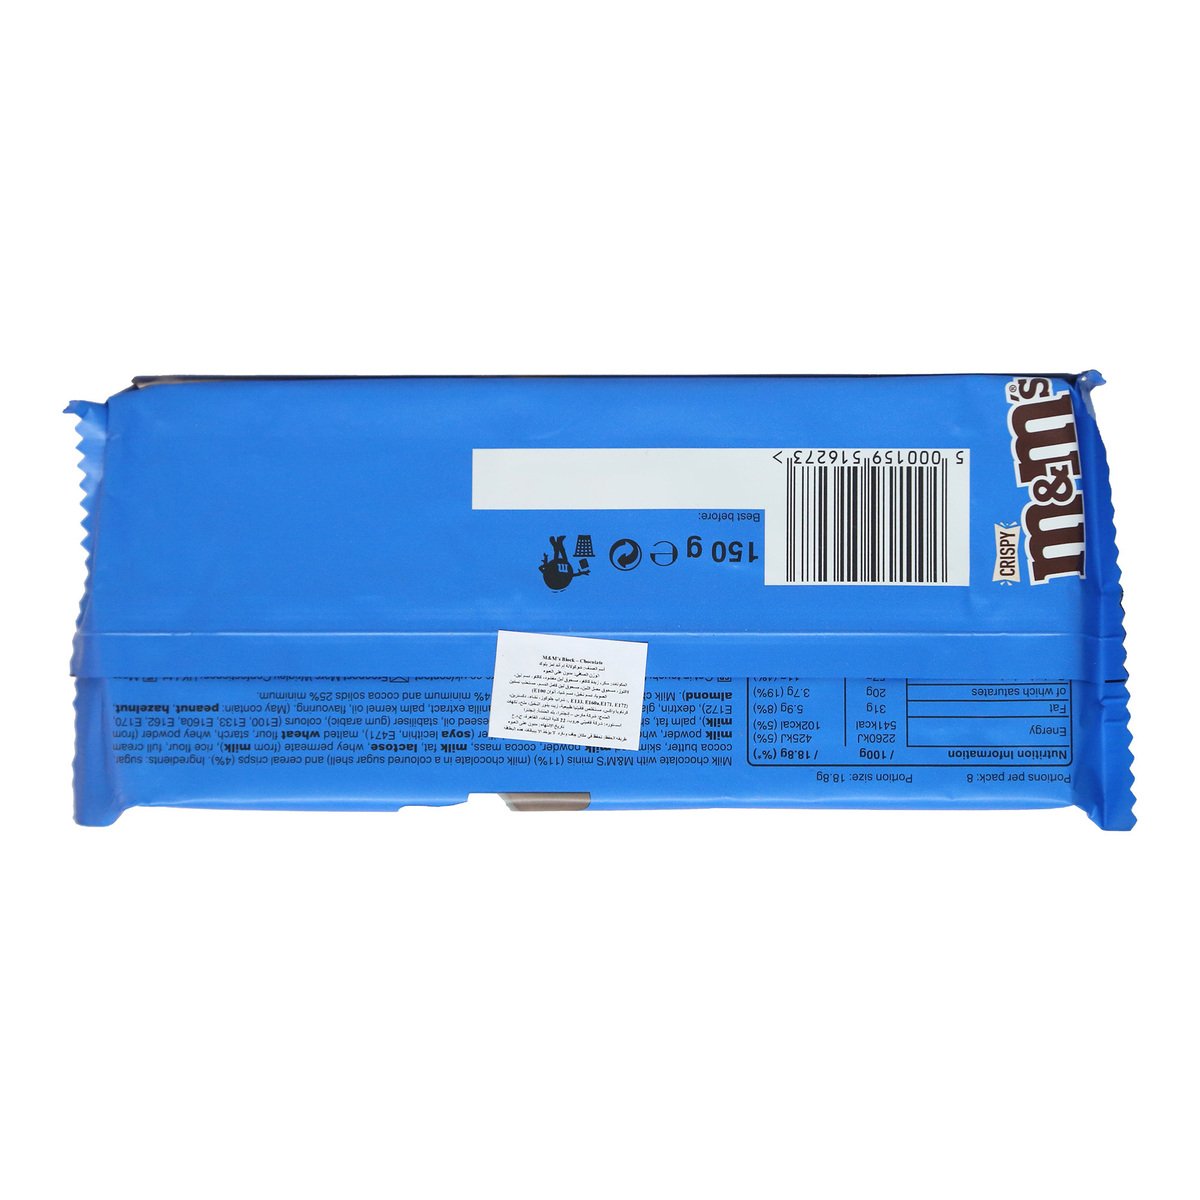 M&M's Crispy Chocolate Block 150 g